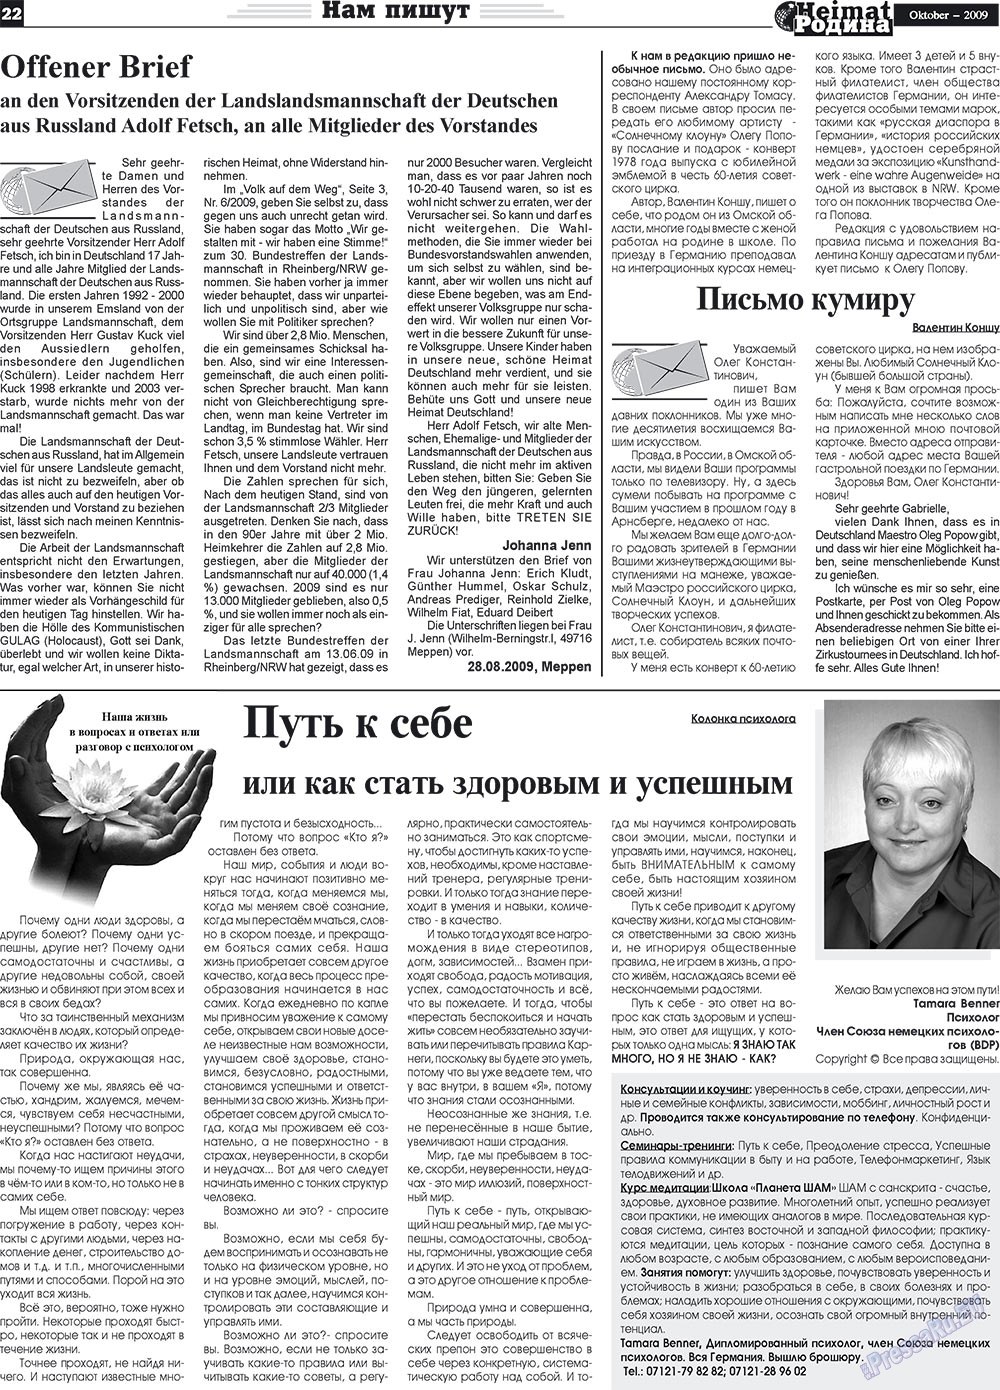 Heimat-Родина, газета. 2009 №10 стр.22